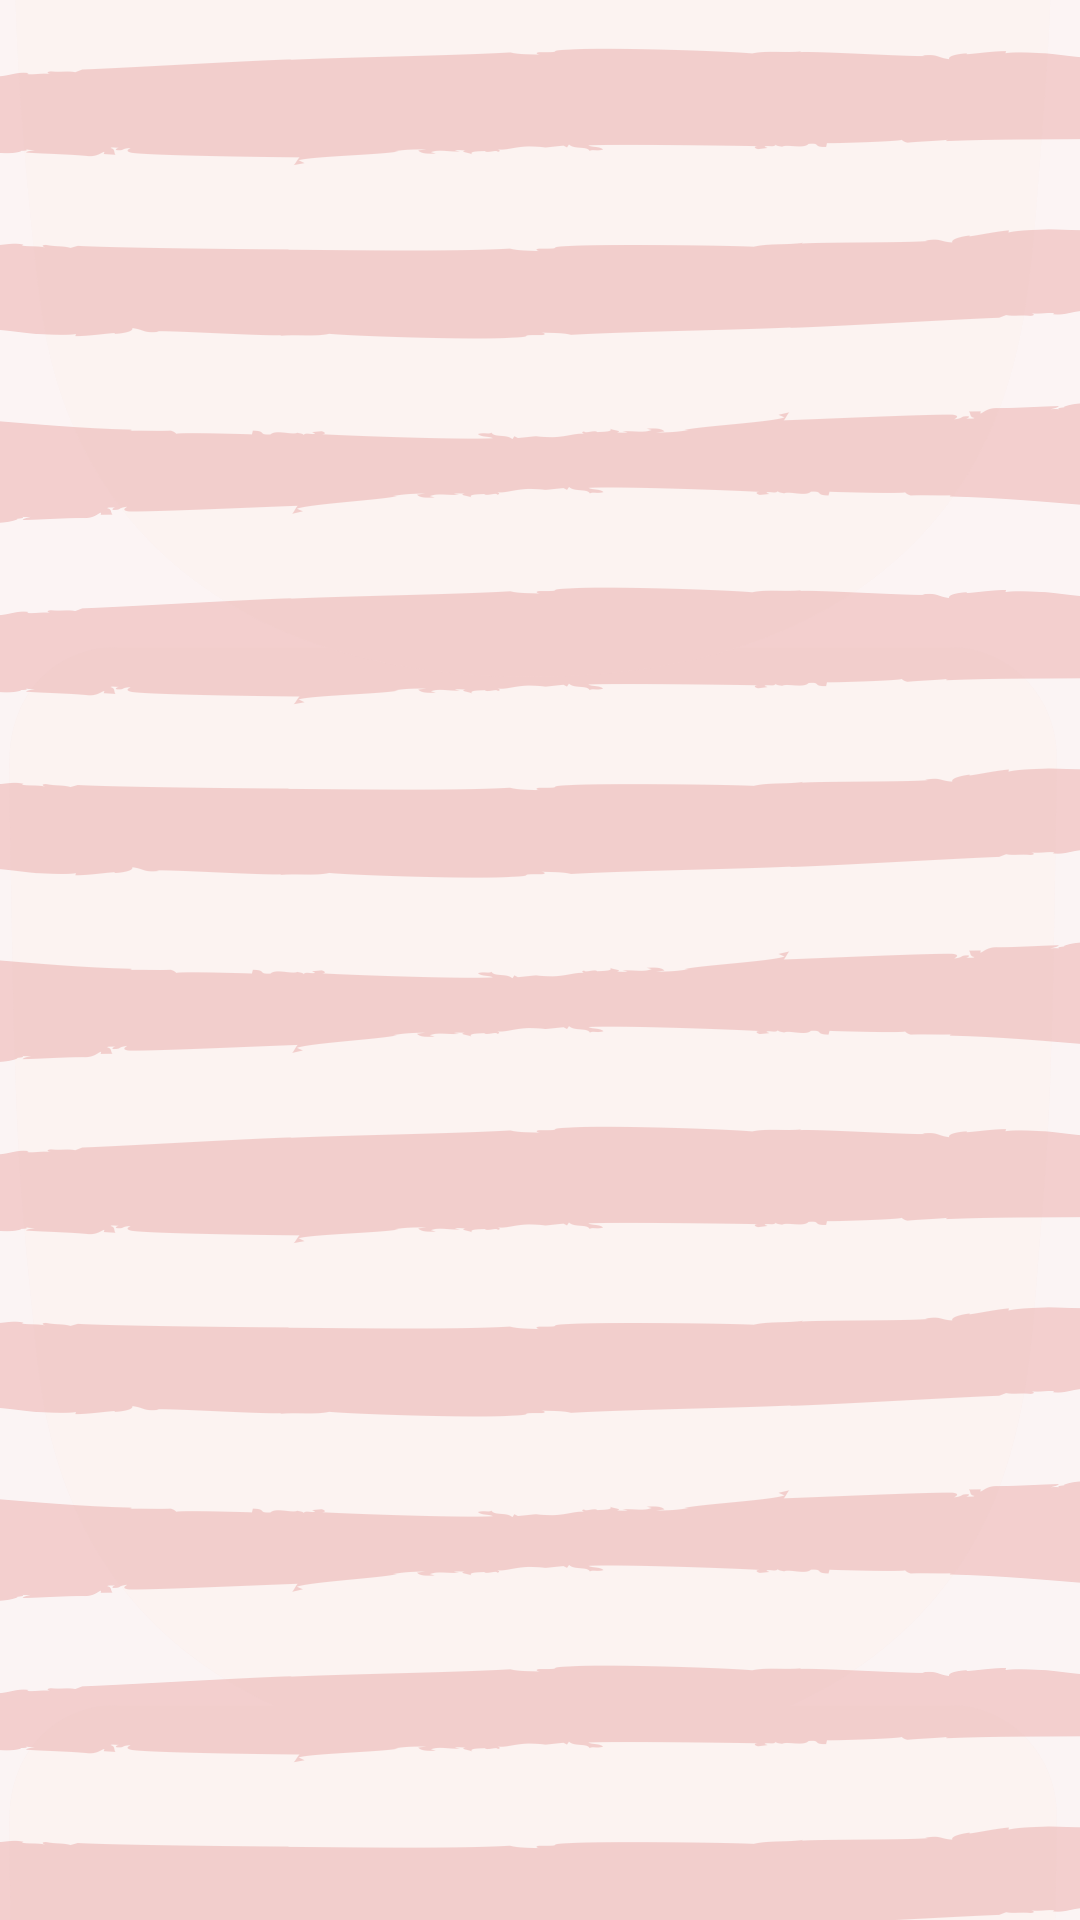 Pink Stripes iPhone Wallpaper. Pink wallpaper iphone, Stripe iphone wallpaper, iPhone wallpaper pattern